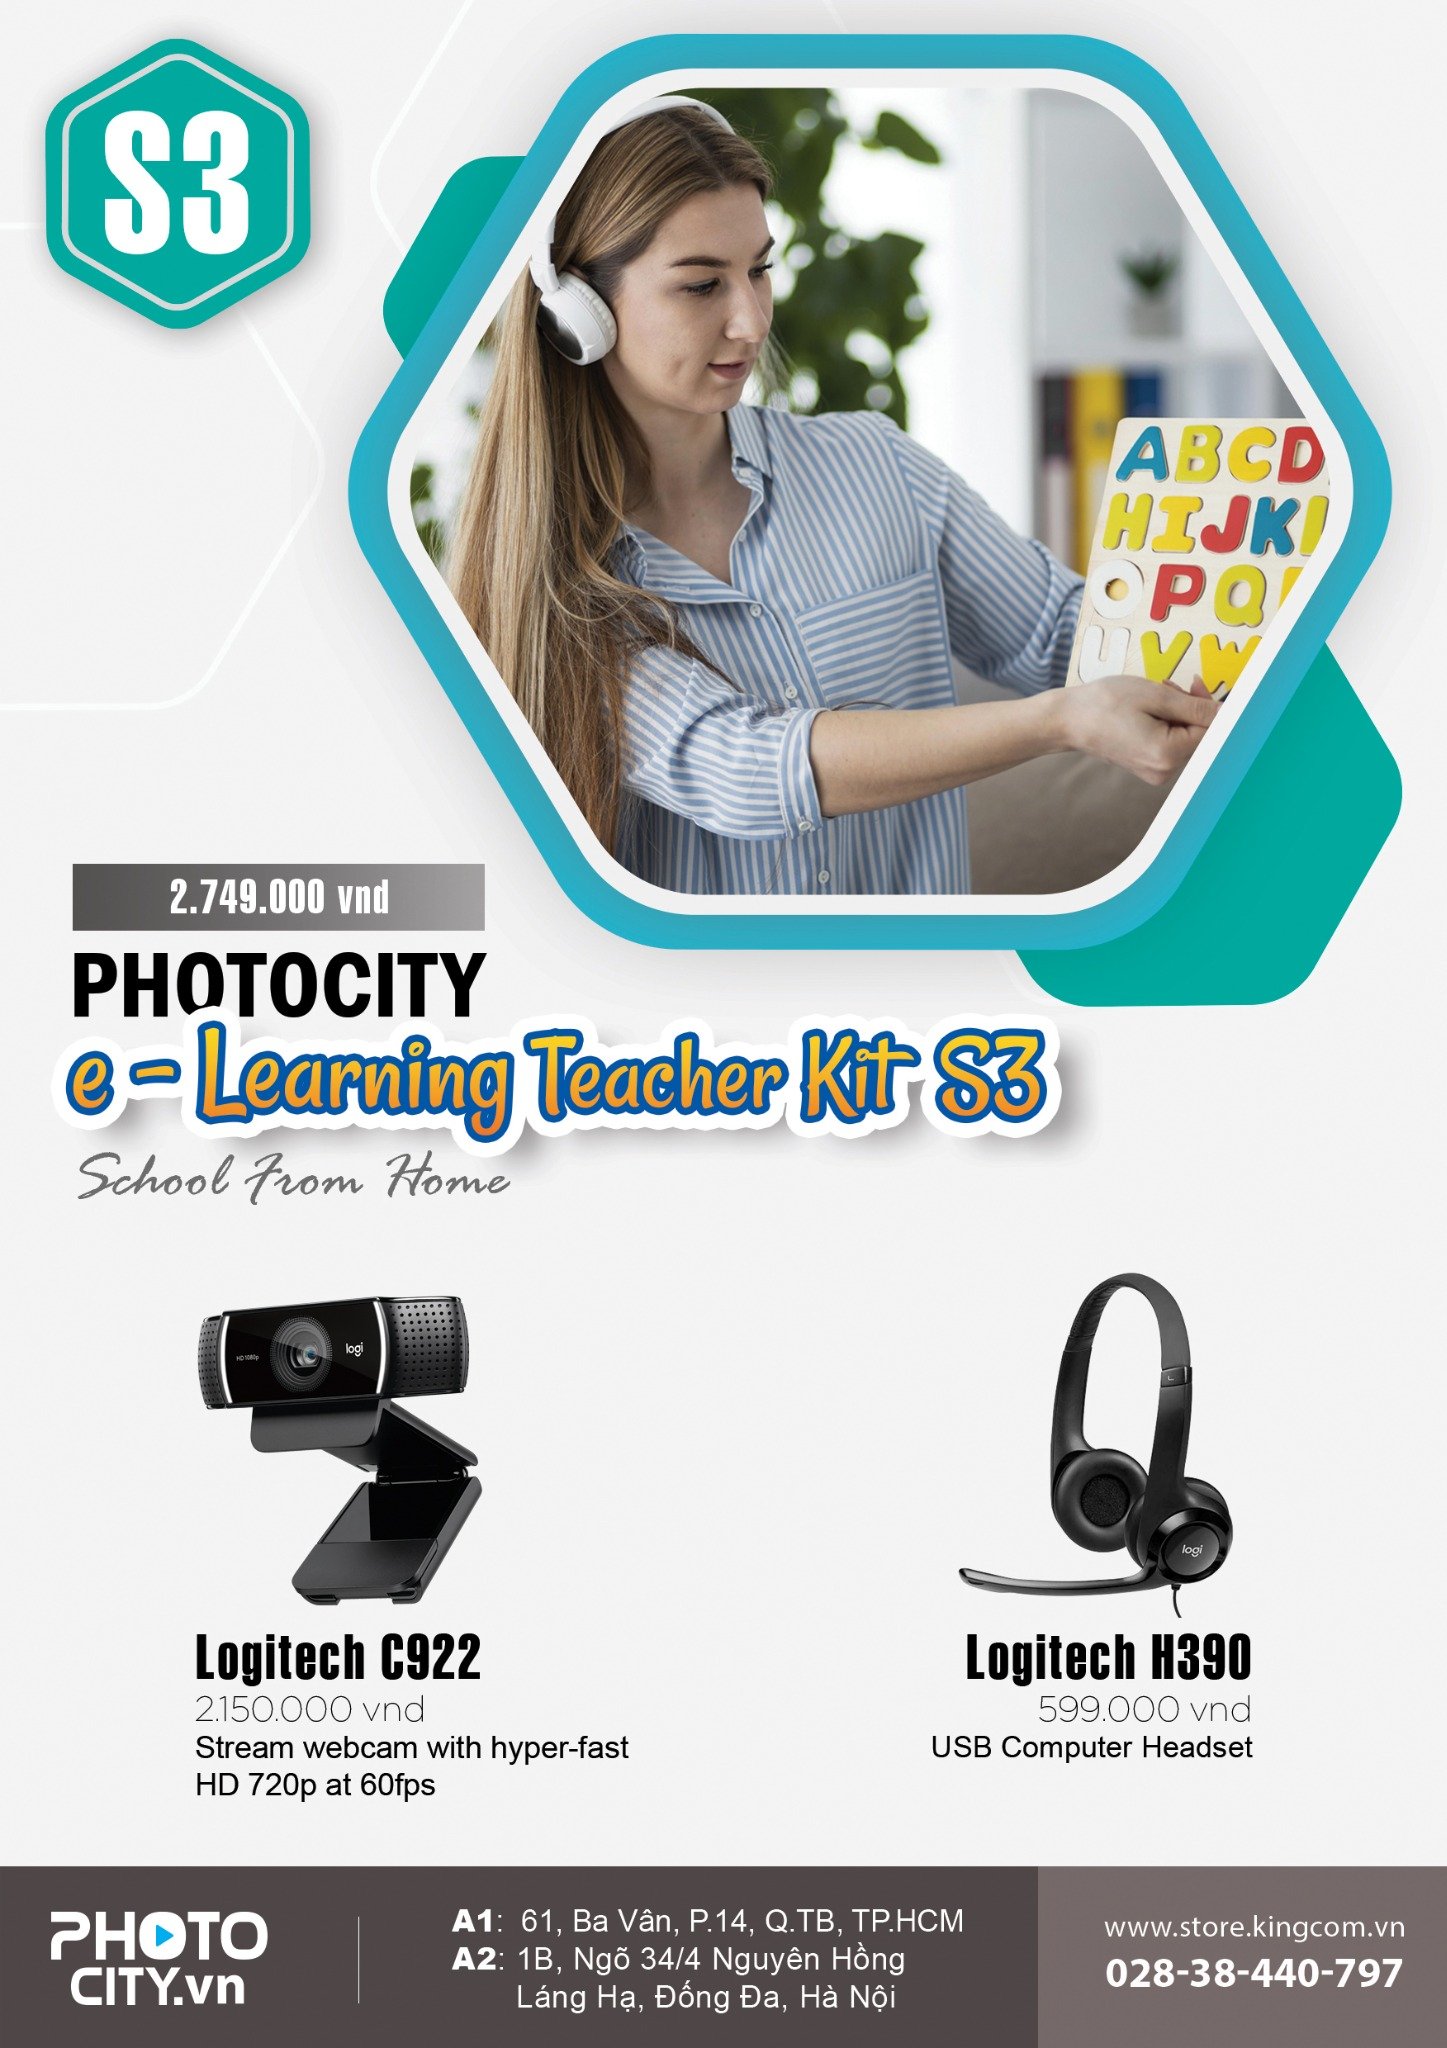 PhotoCity e -learning Teacher Kit S3 (Bộ dụng cụ dạy học online)